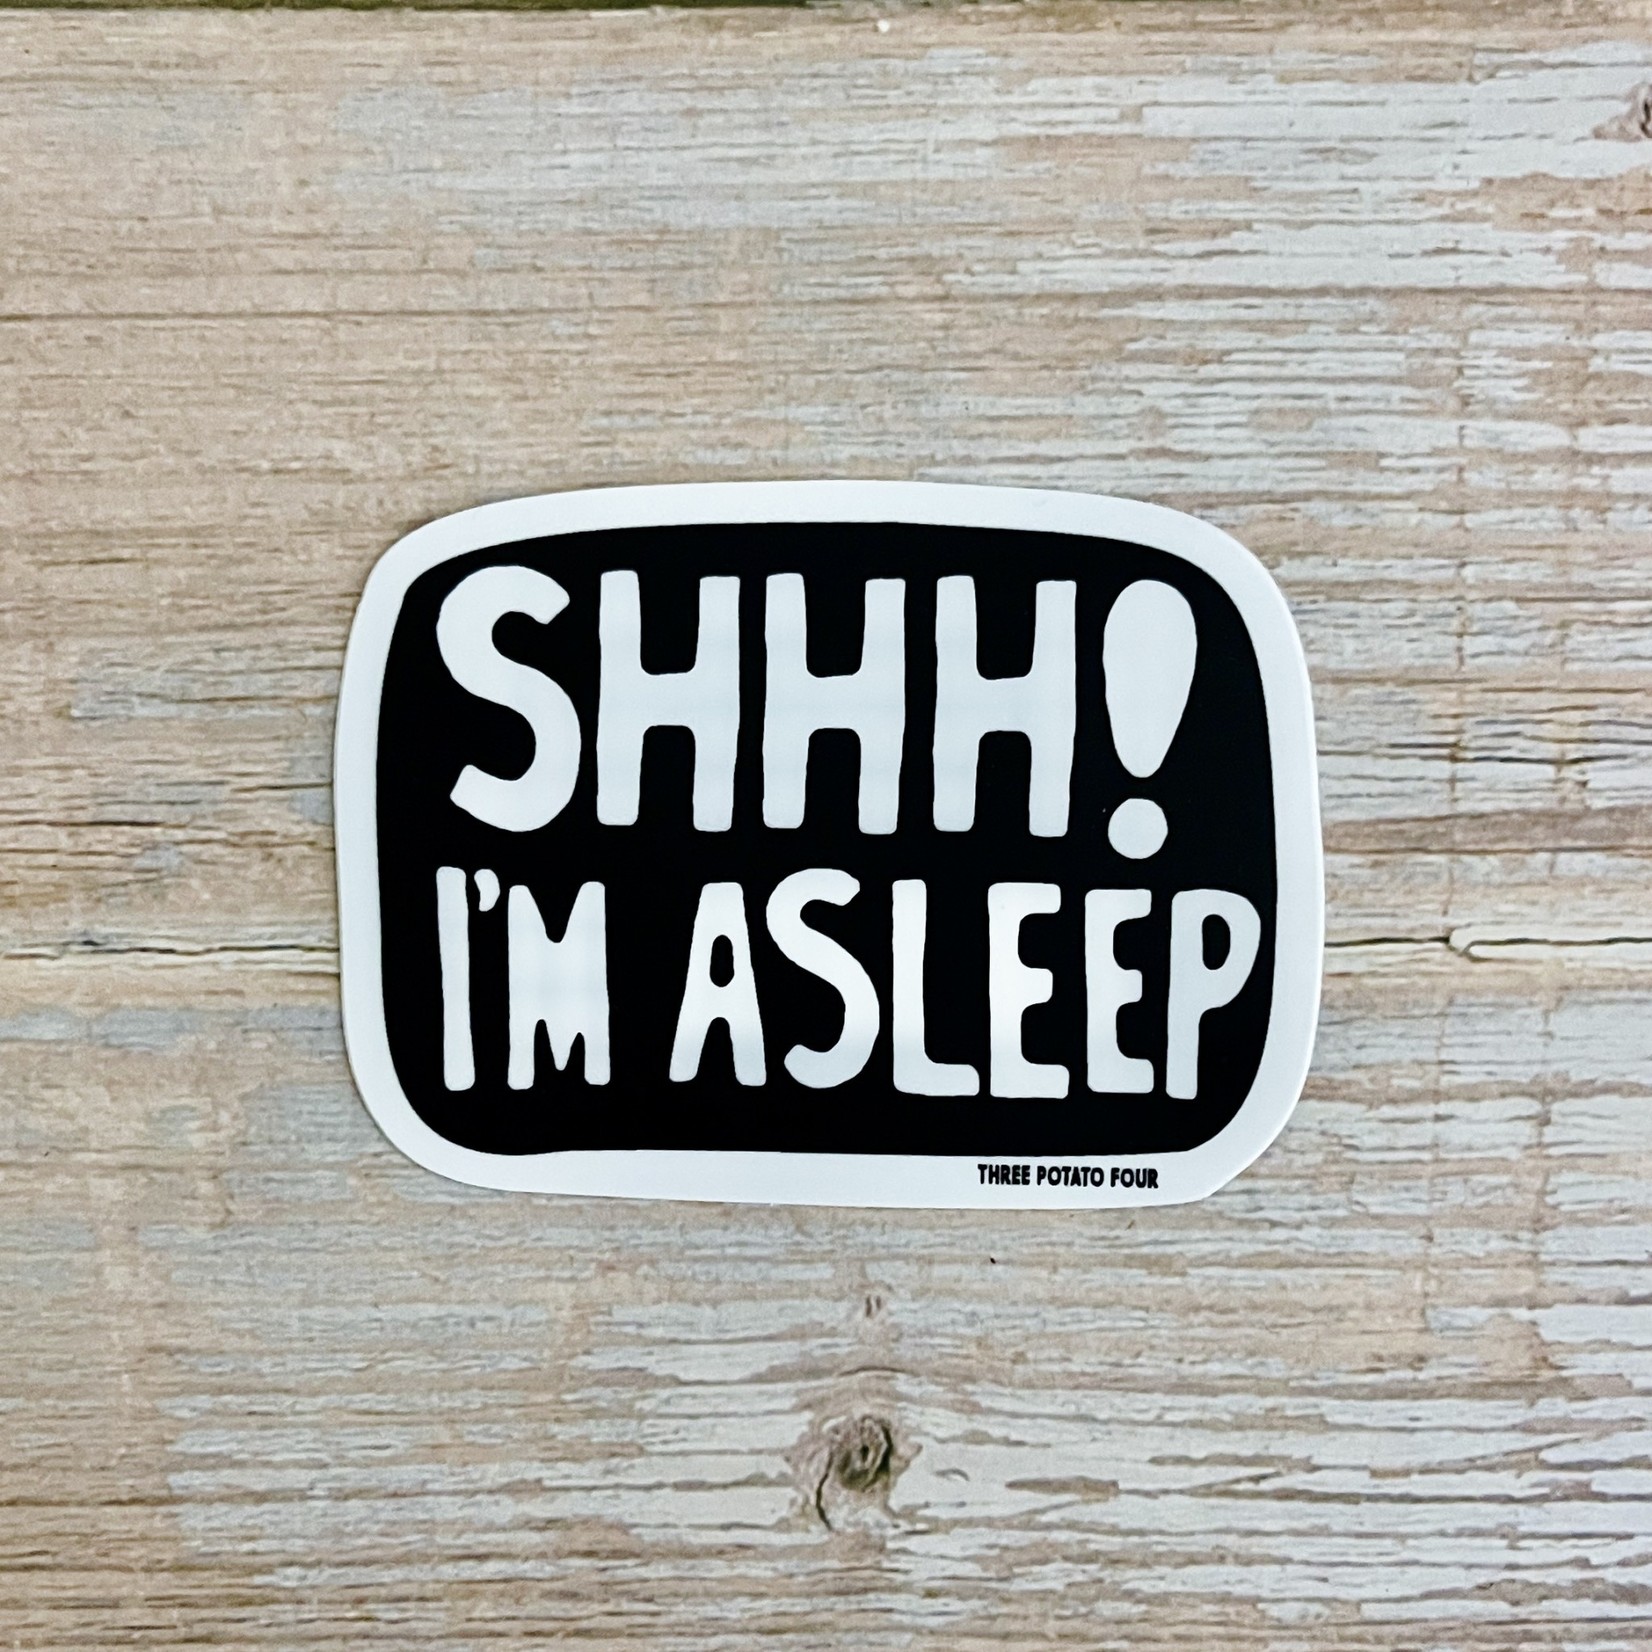 Three Potato Four Shhh! I'm Asleep Sticker